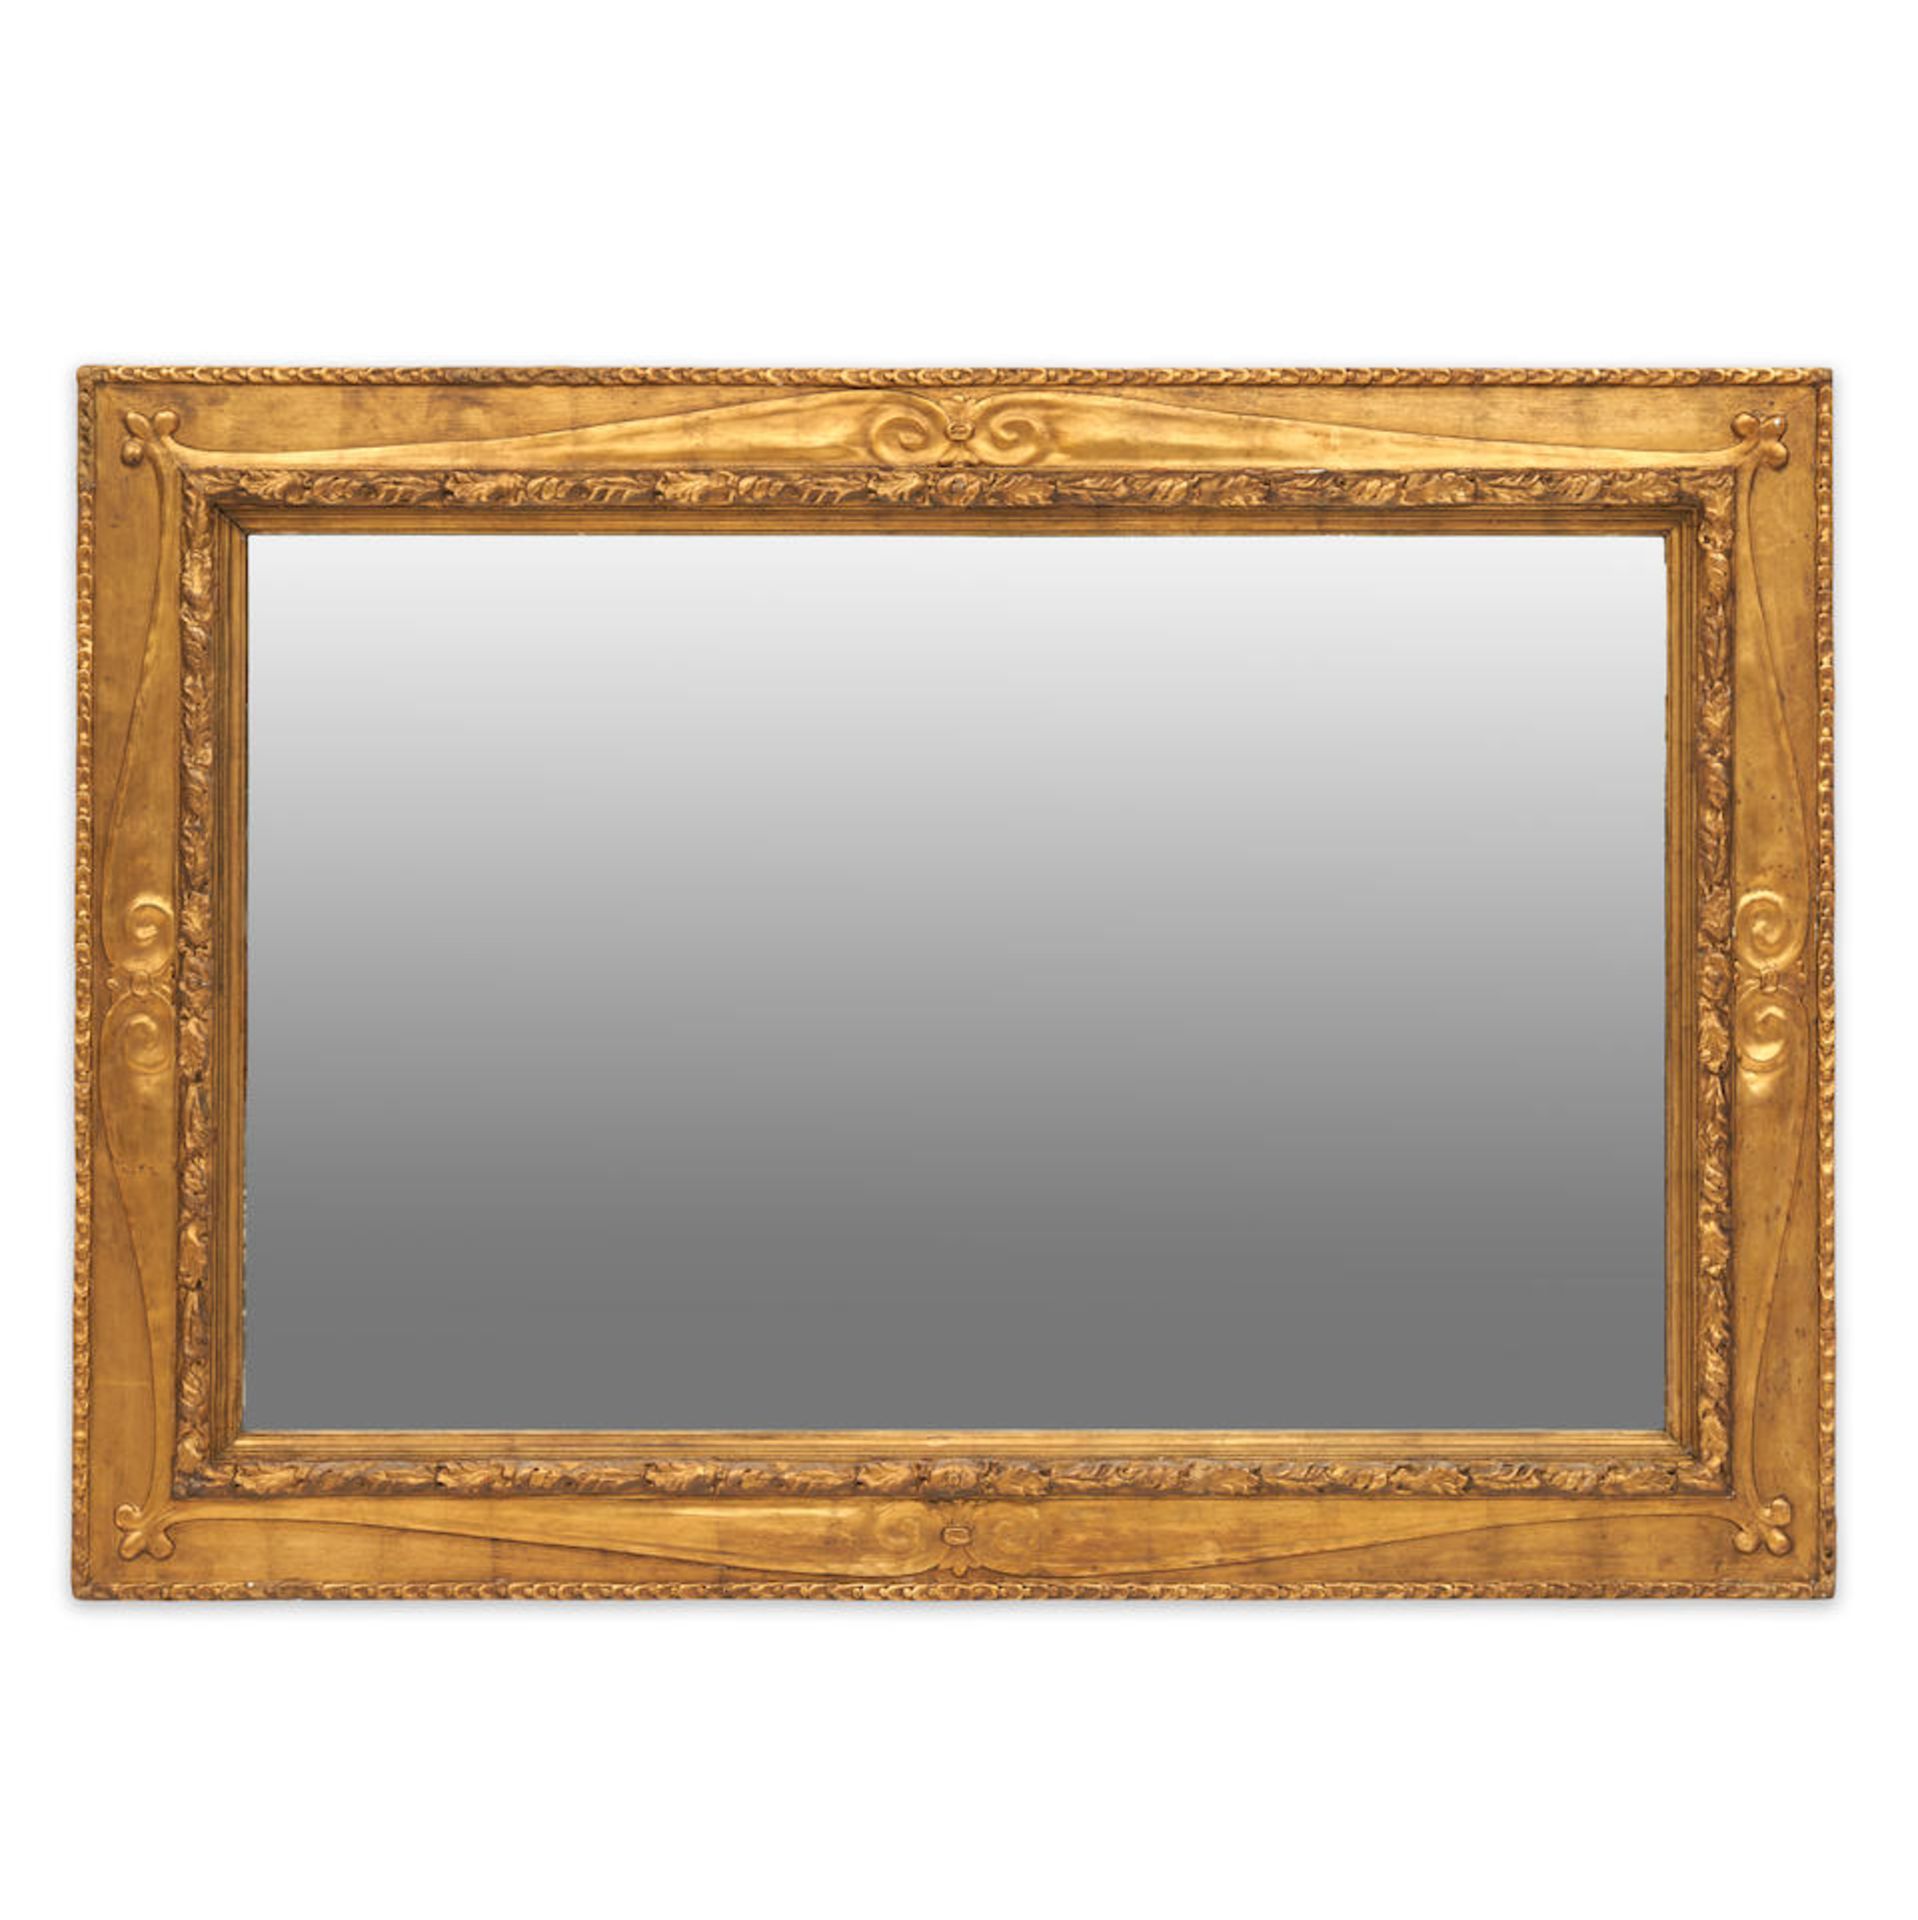 Mirror in Spectacular Gilt Composition Frame, Cottier & Co. (retailer, 1873-1915), New York, New...